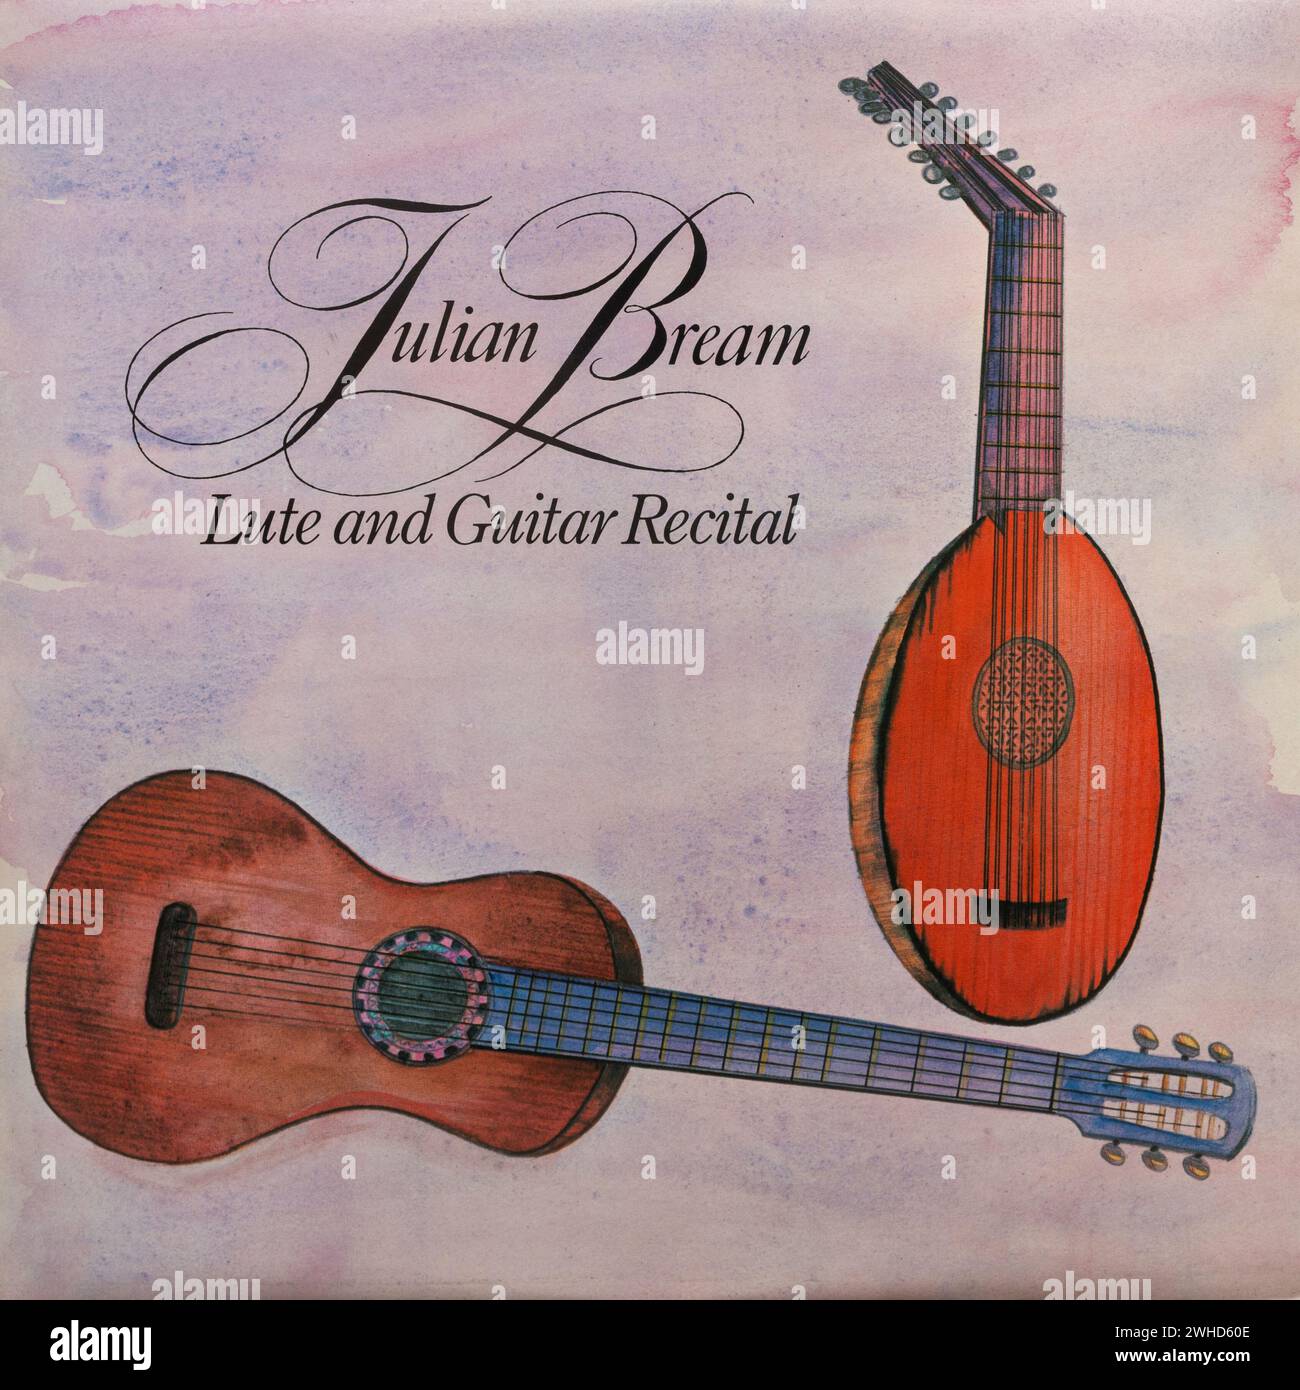 Julian Bream Lute and Guitar Recital vinyl LP record album cover Stock Photo